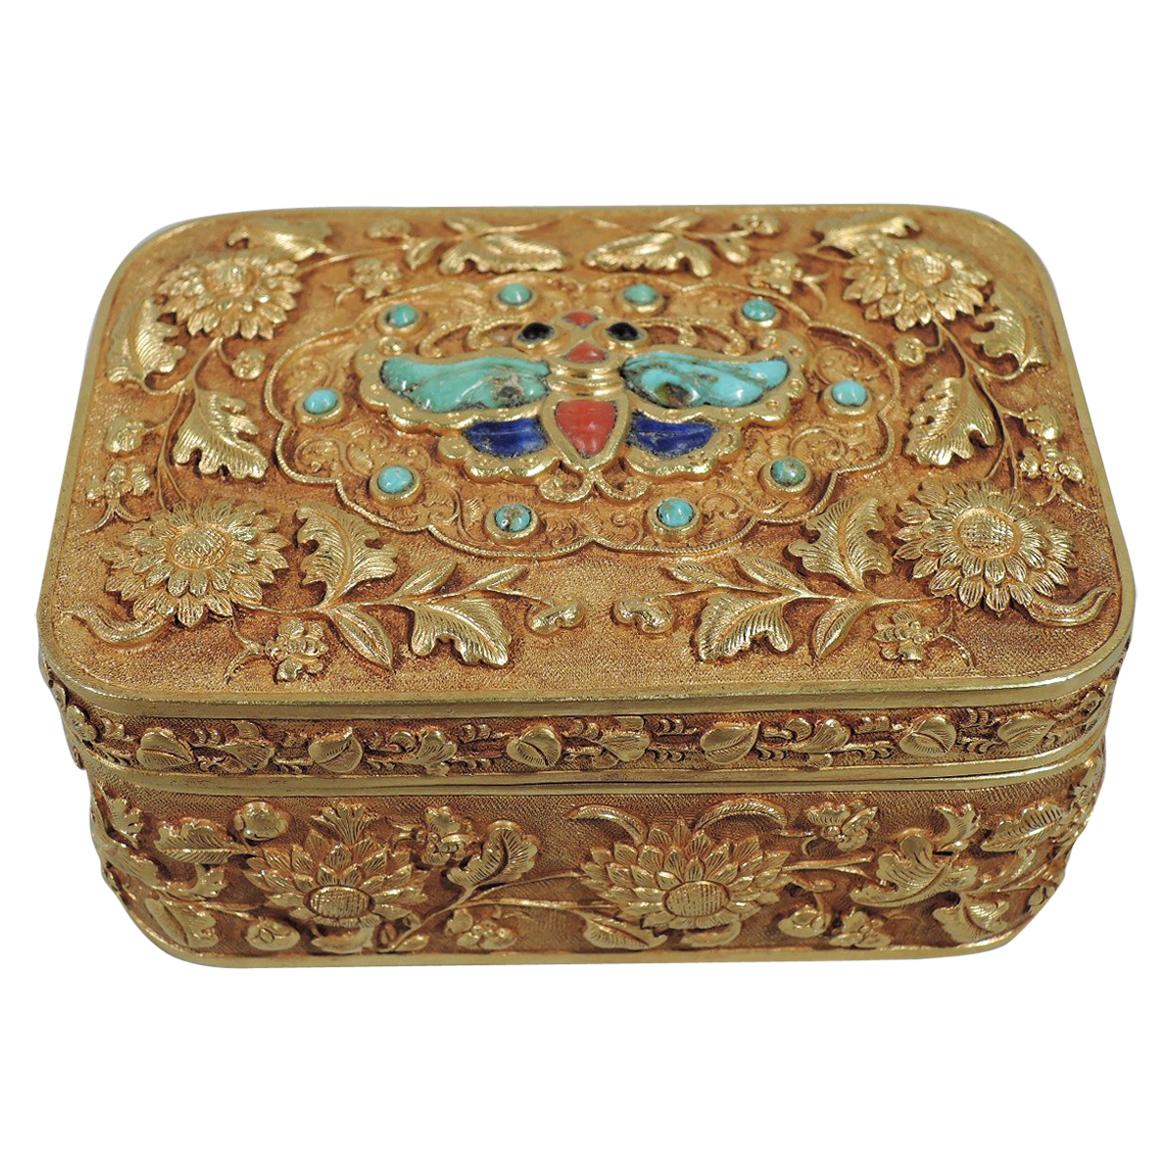 Rare Antique Chinese 22 Karat Gold Box with Semi-Precious Stones